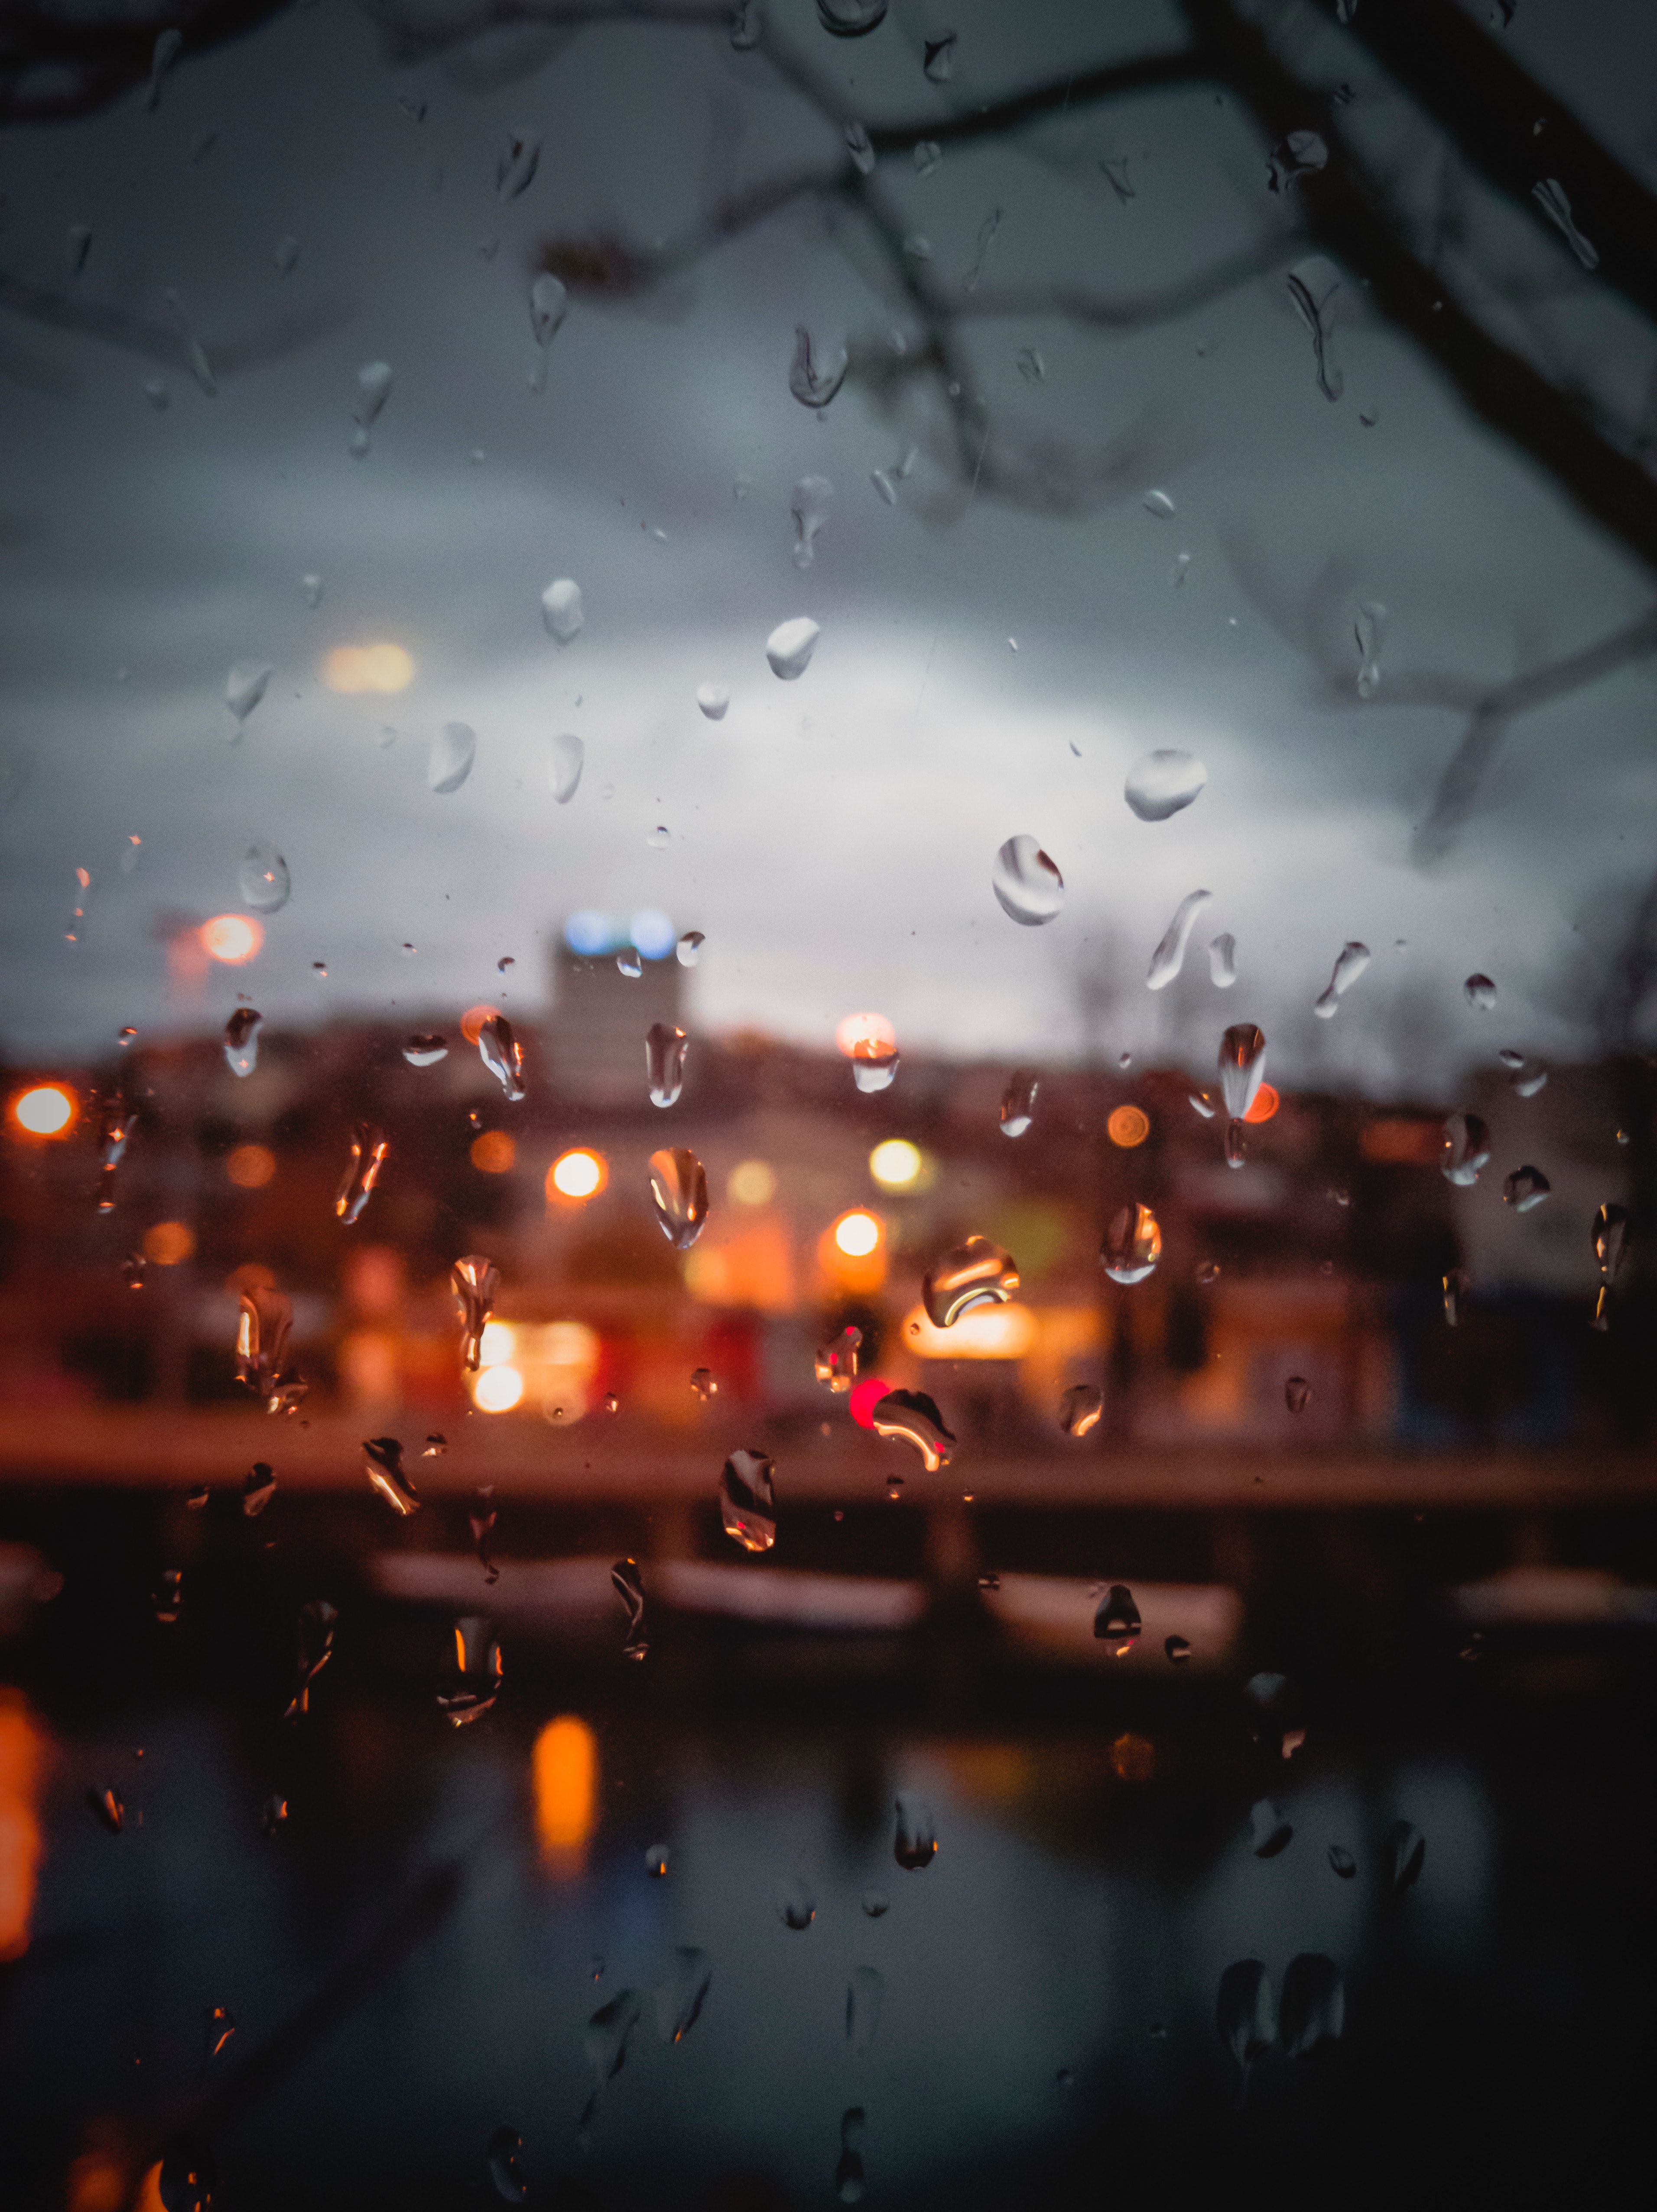 moisture, rain, drops, macro, blur, smooth, glass, window